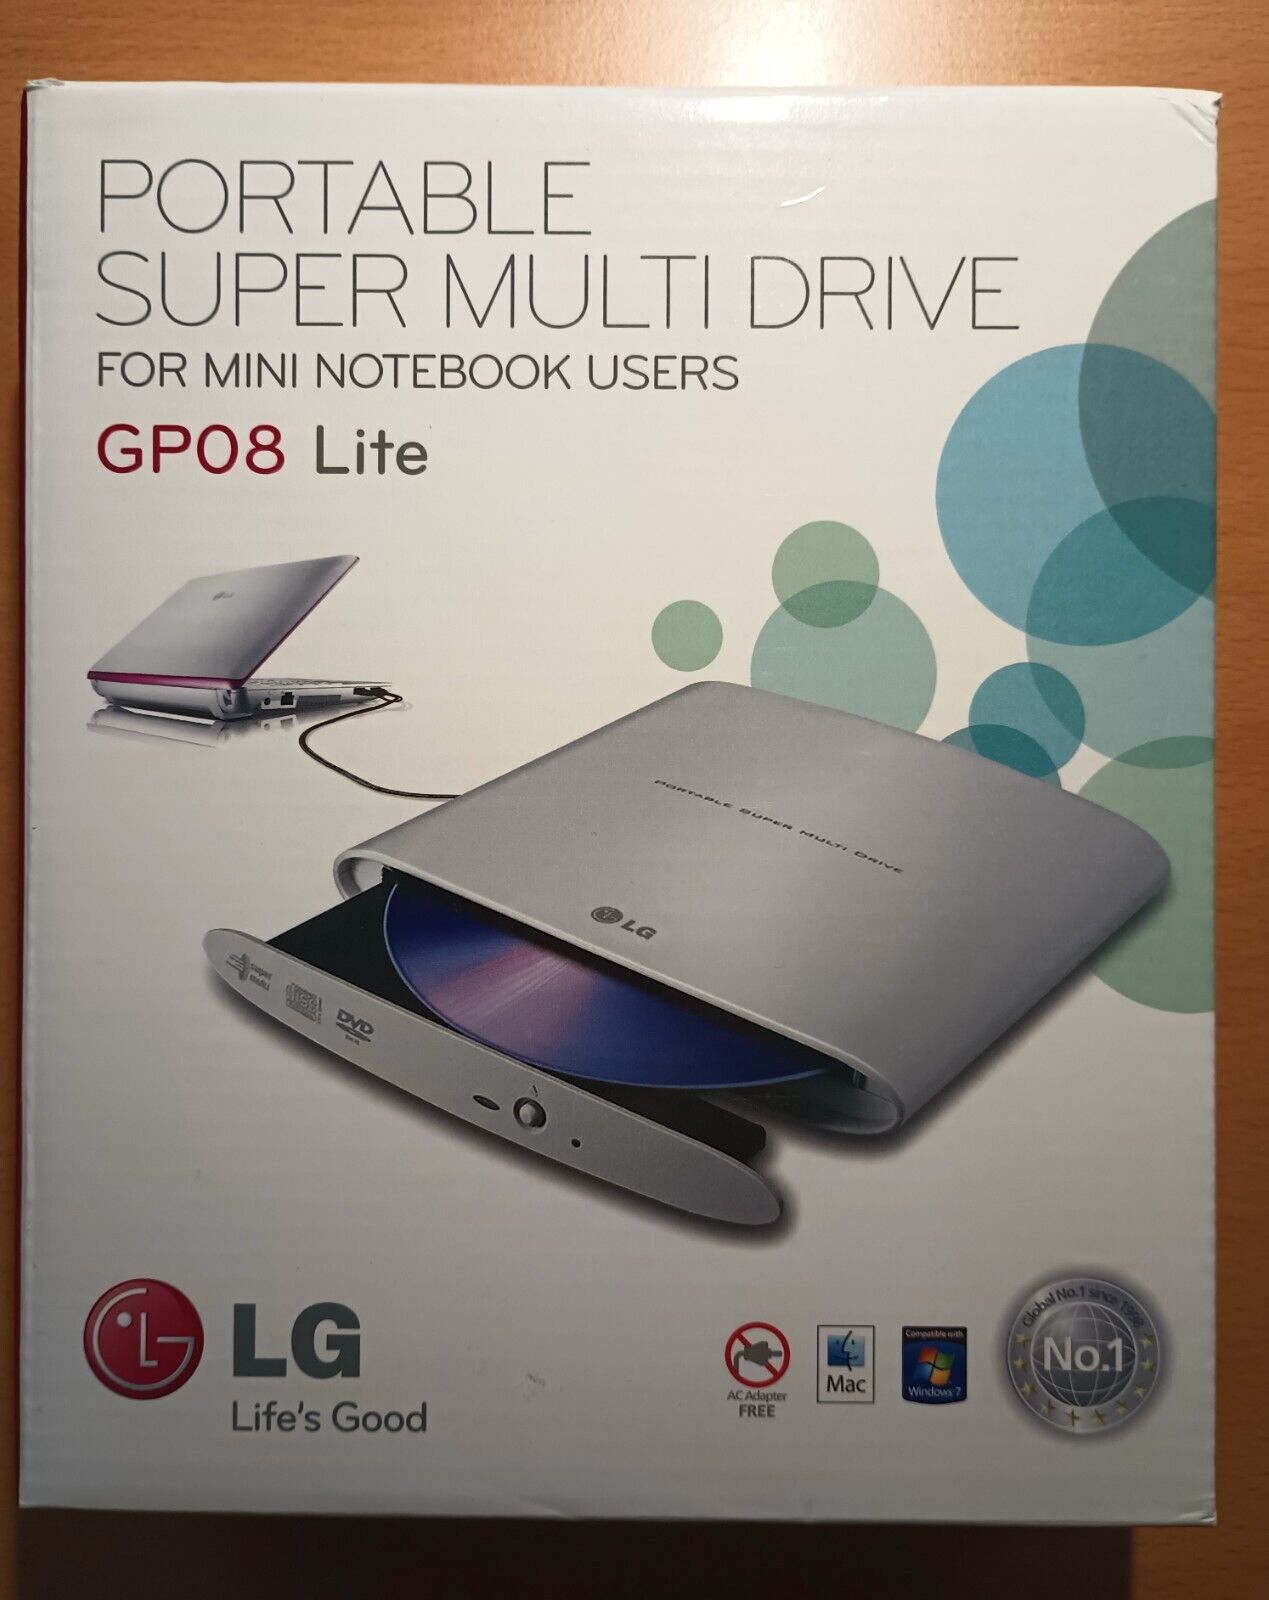 LG Portable Super Muti Drive GP08 Lite